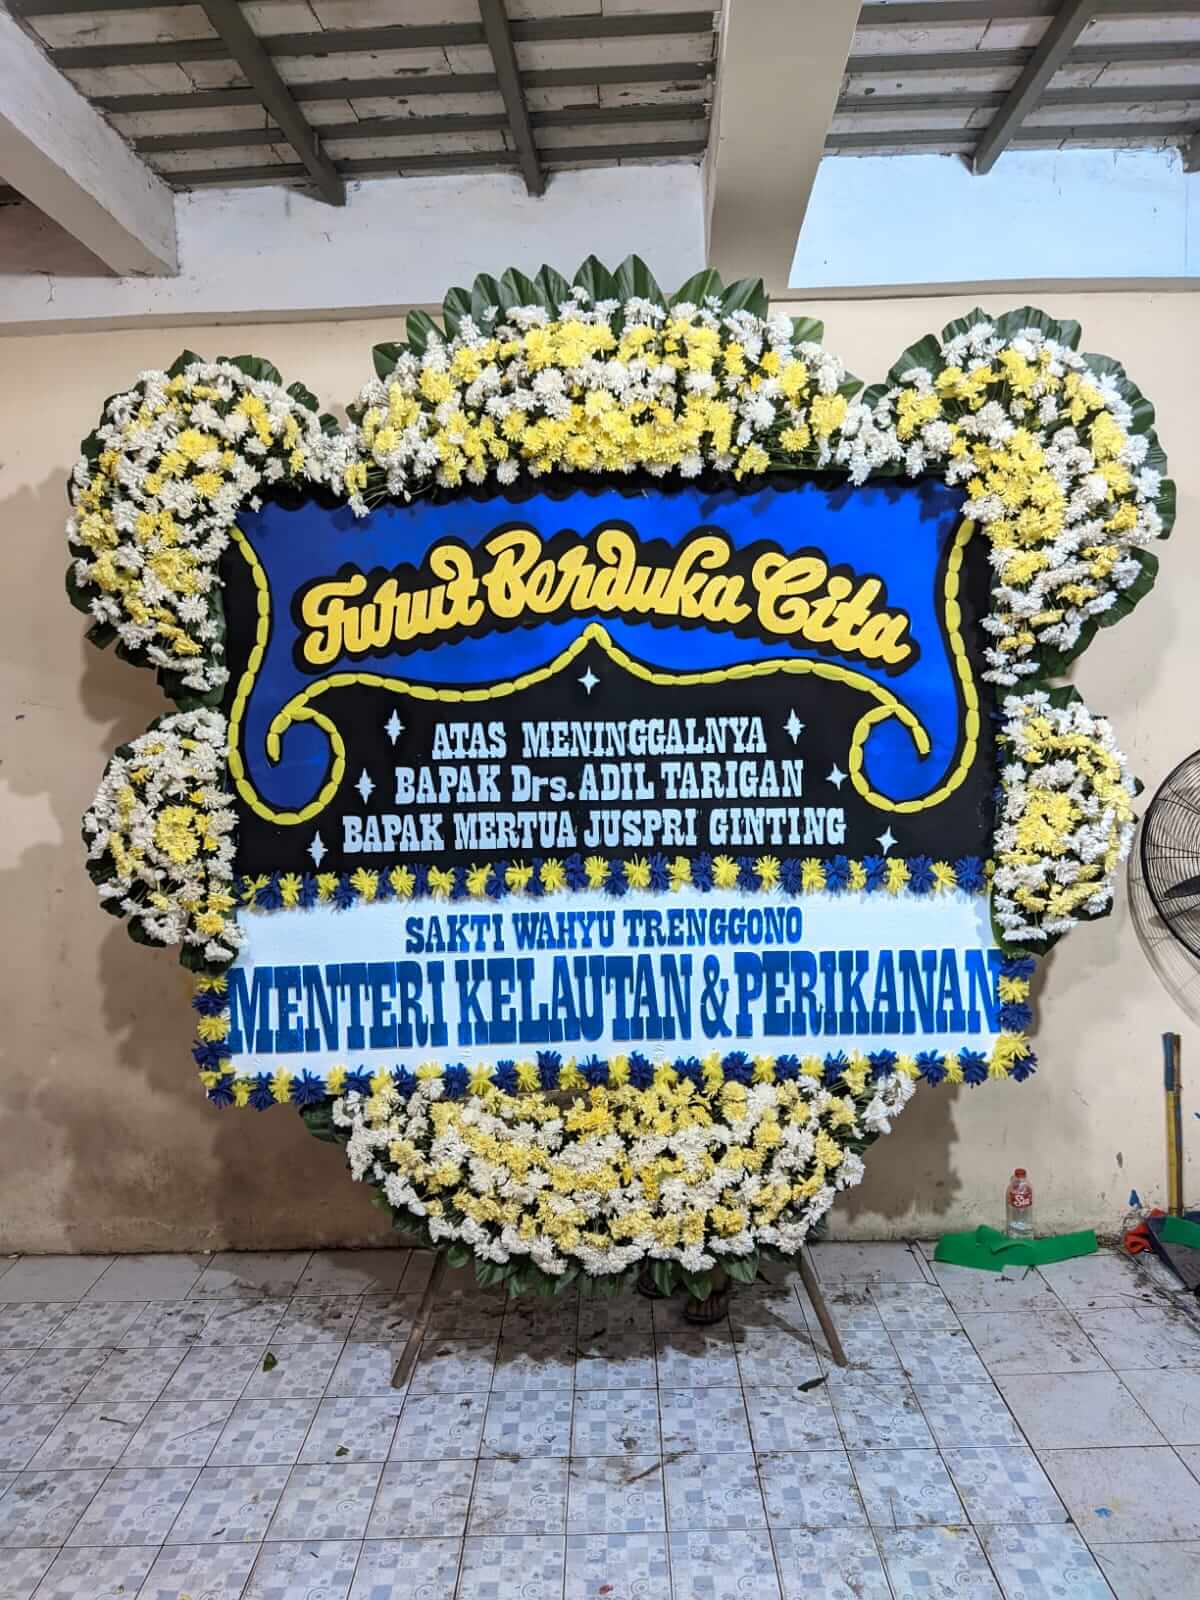 Toko Bunga Pekojan: Toko Bunga Terpercaya di Jakarta Barat